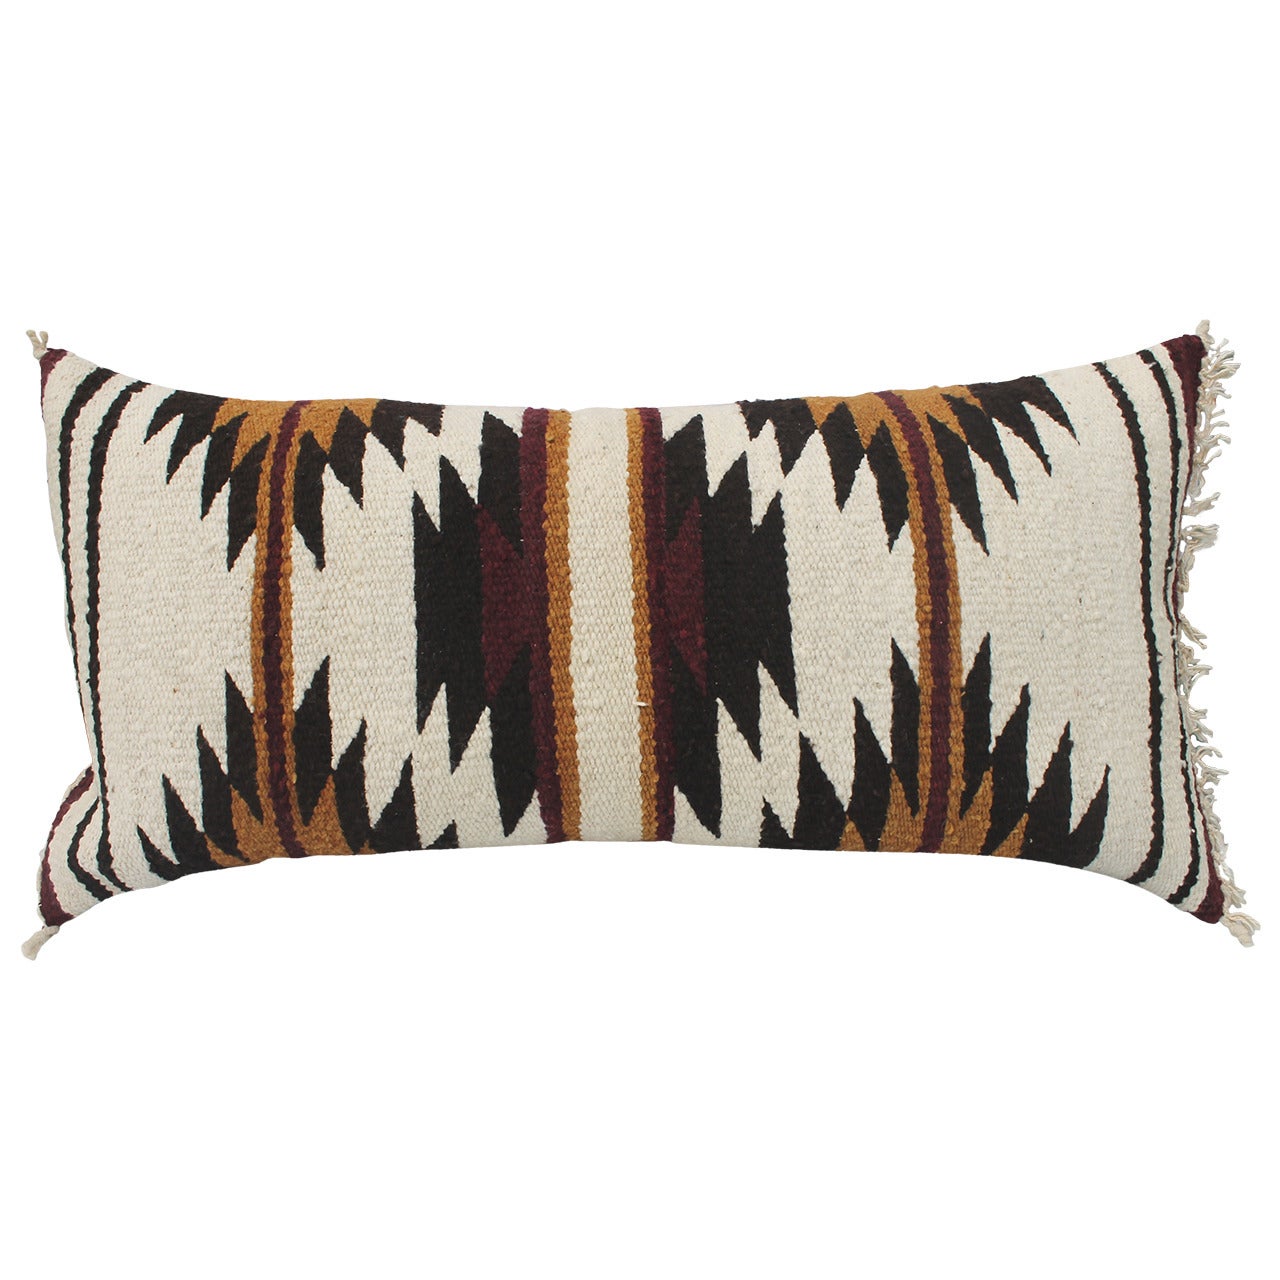 Navajo Geometric Indian Weaving Bolster Pillow